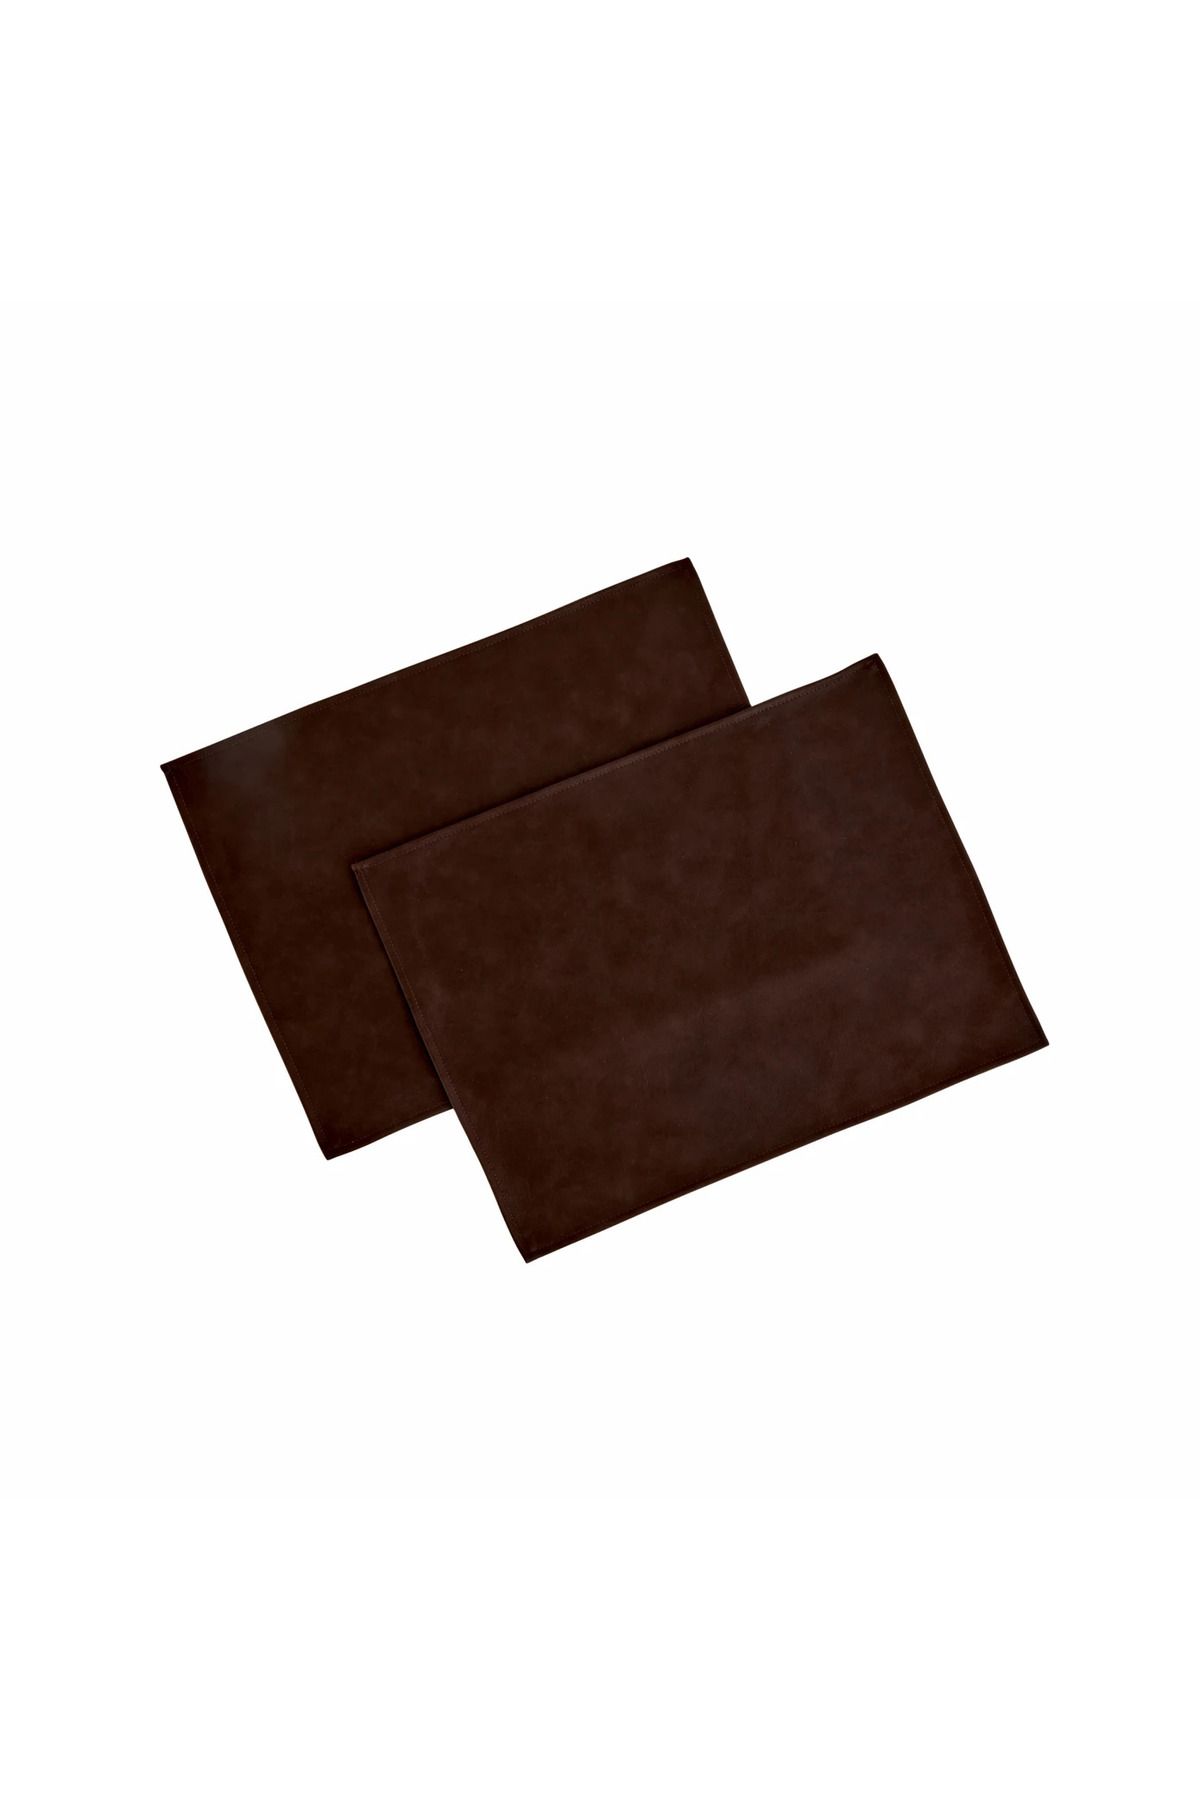 Karaca Home Leather Amerikan Servis ve Peçete Yüzüğü Seti 4 Parça